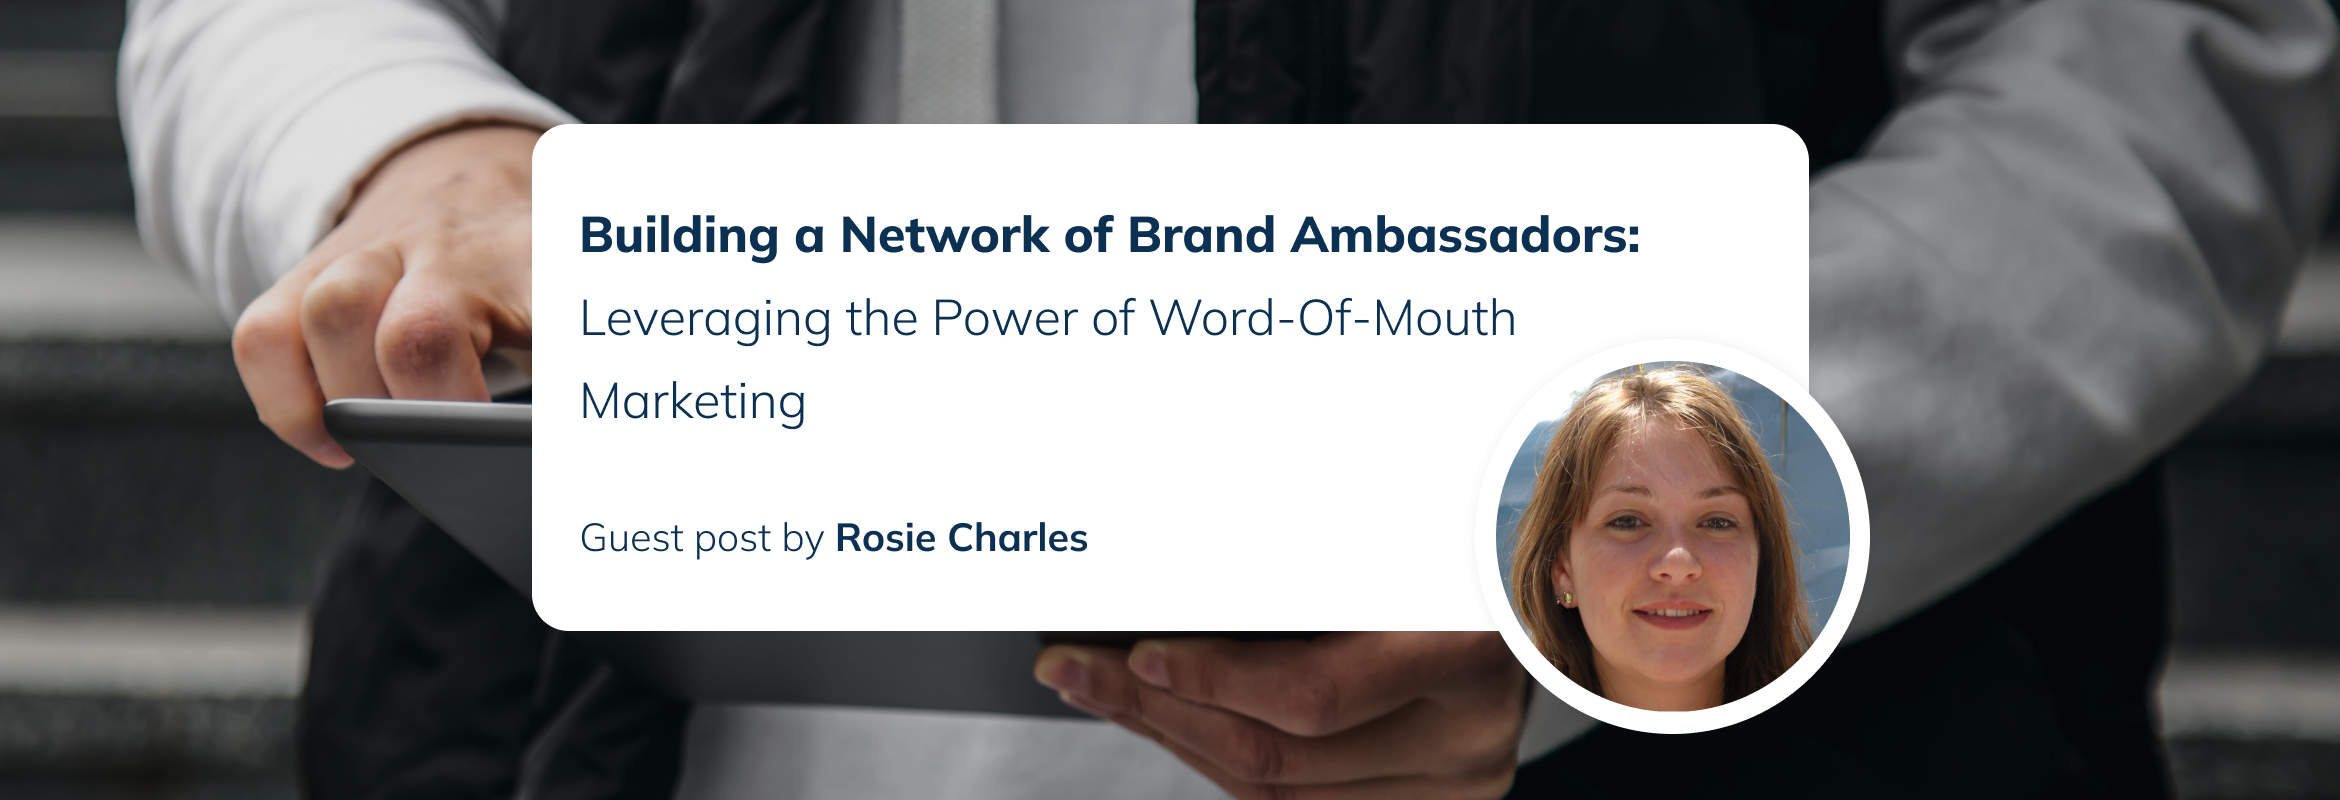 building a network of brand ambassadors